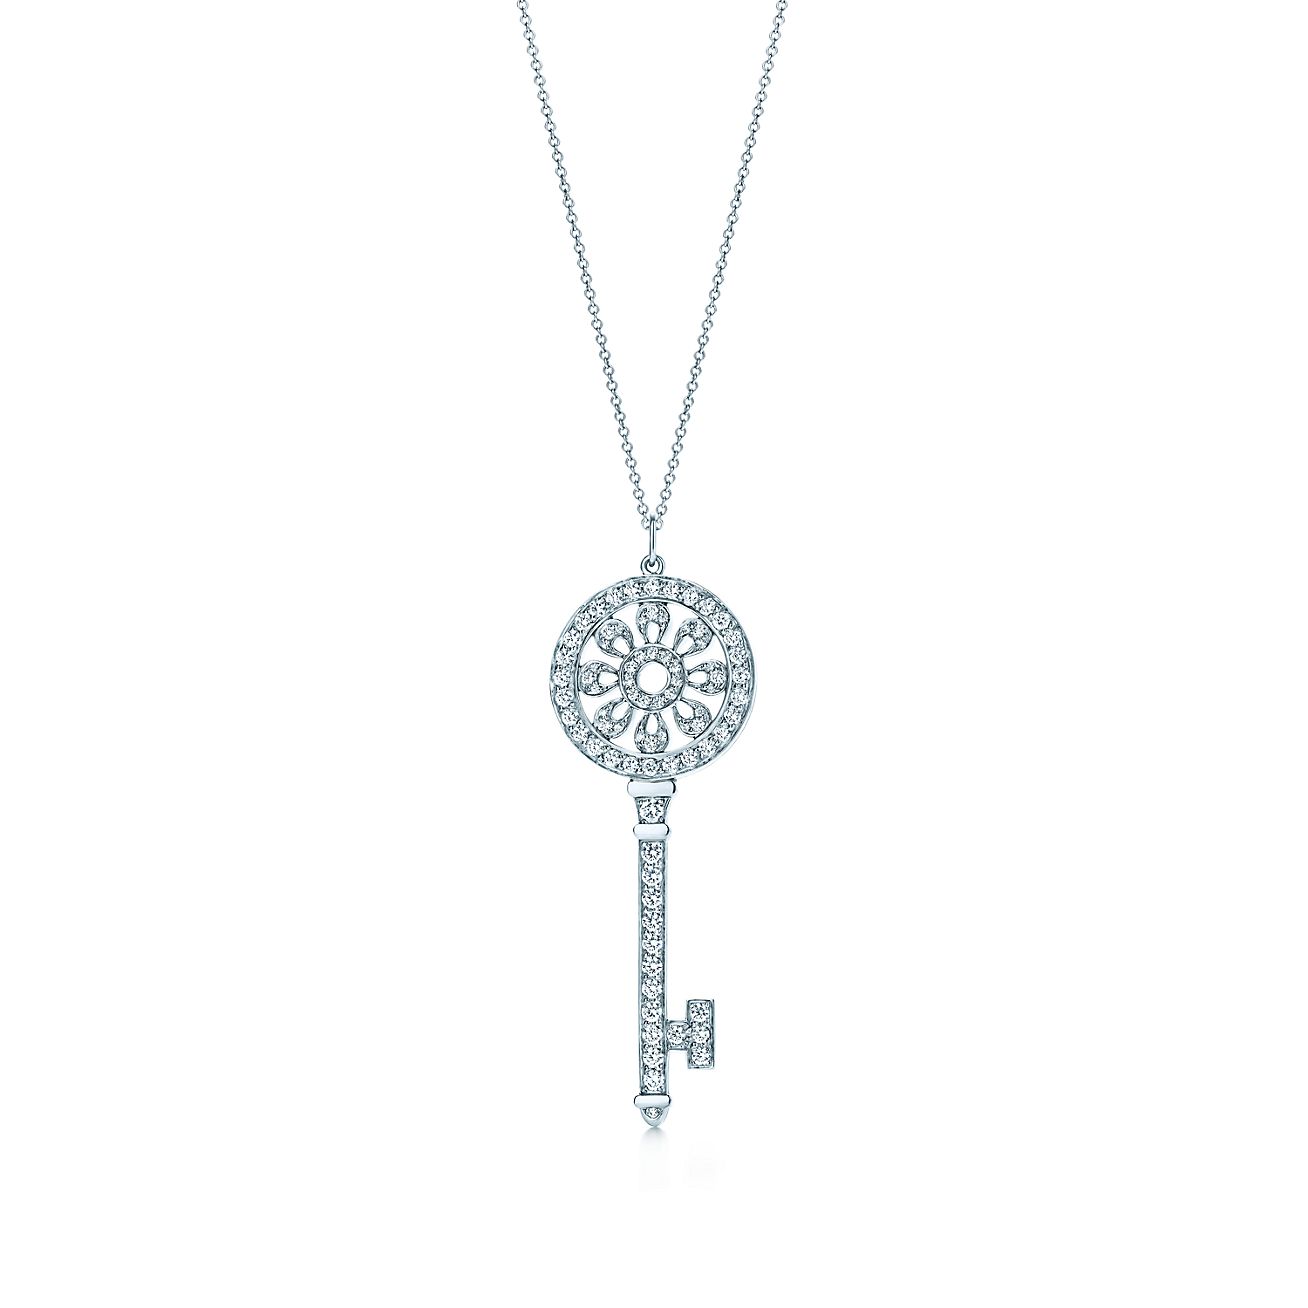 Tiffany Keys petals key pendant with diamonds in platinum on a 